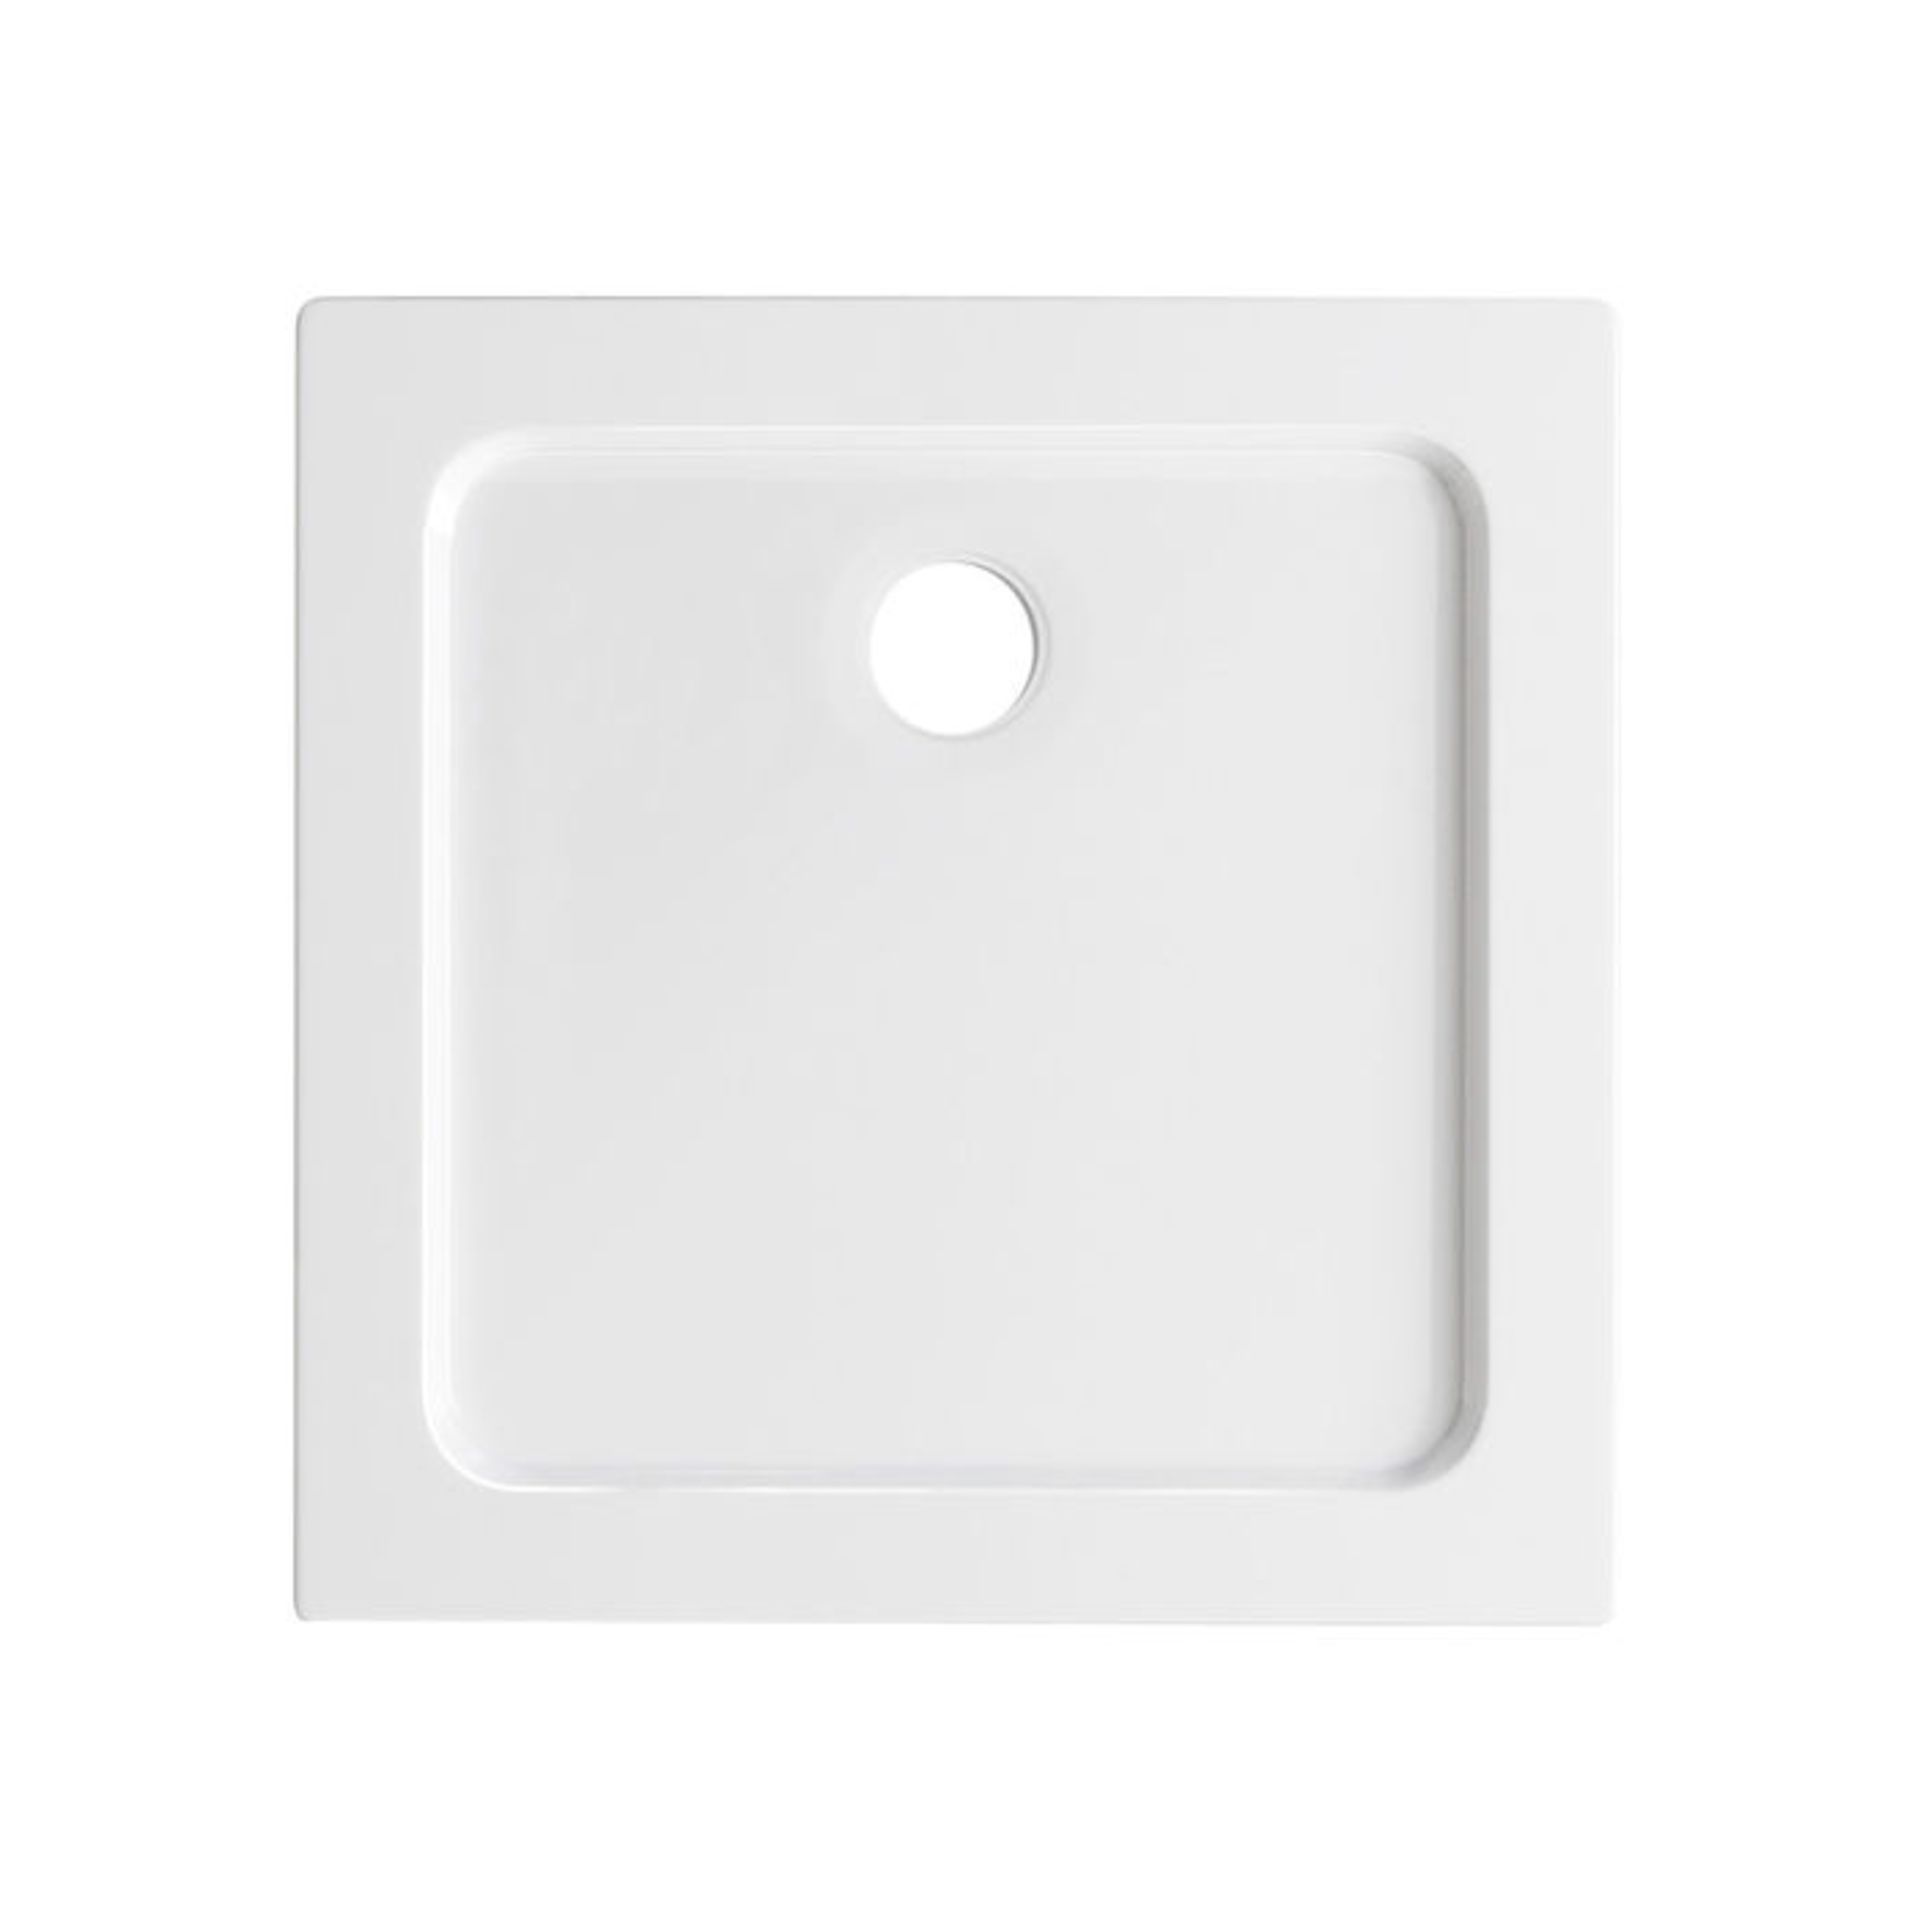 (KL53) 800x800mm Square Ultra Slim Stone Shower Tray. Low profile ultra slim design Gel coated stone